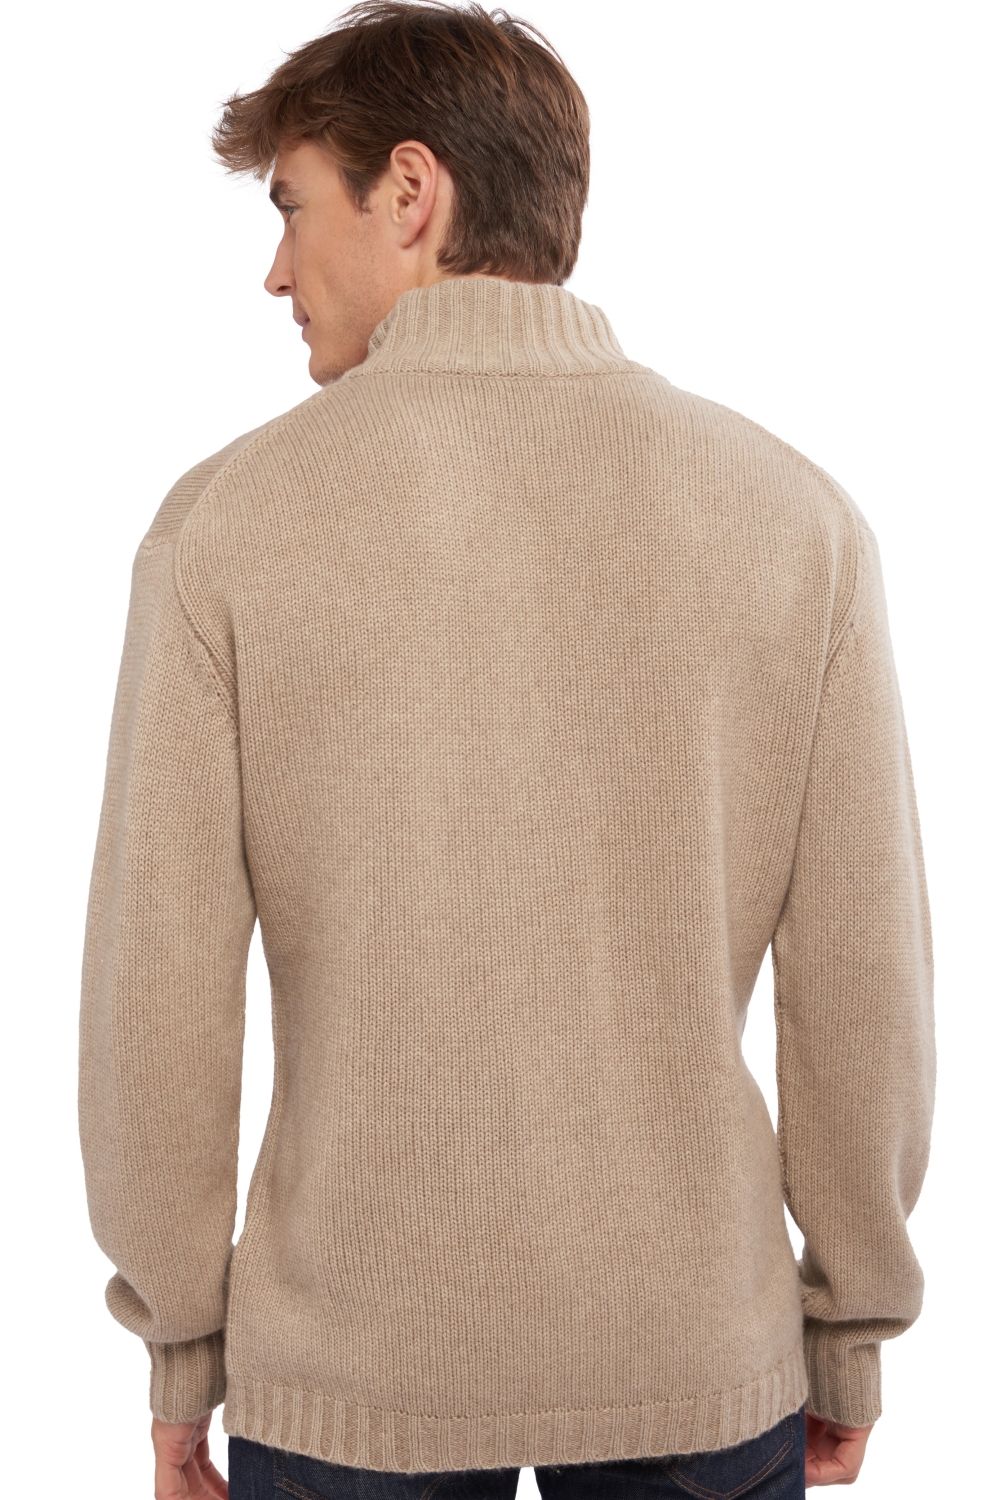 Cashmere men waistcoat sleeveless sweaters wolf natural stone m